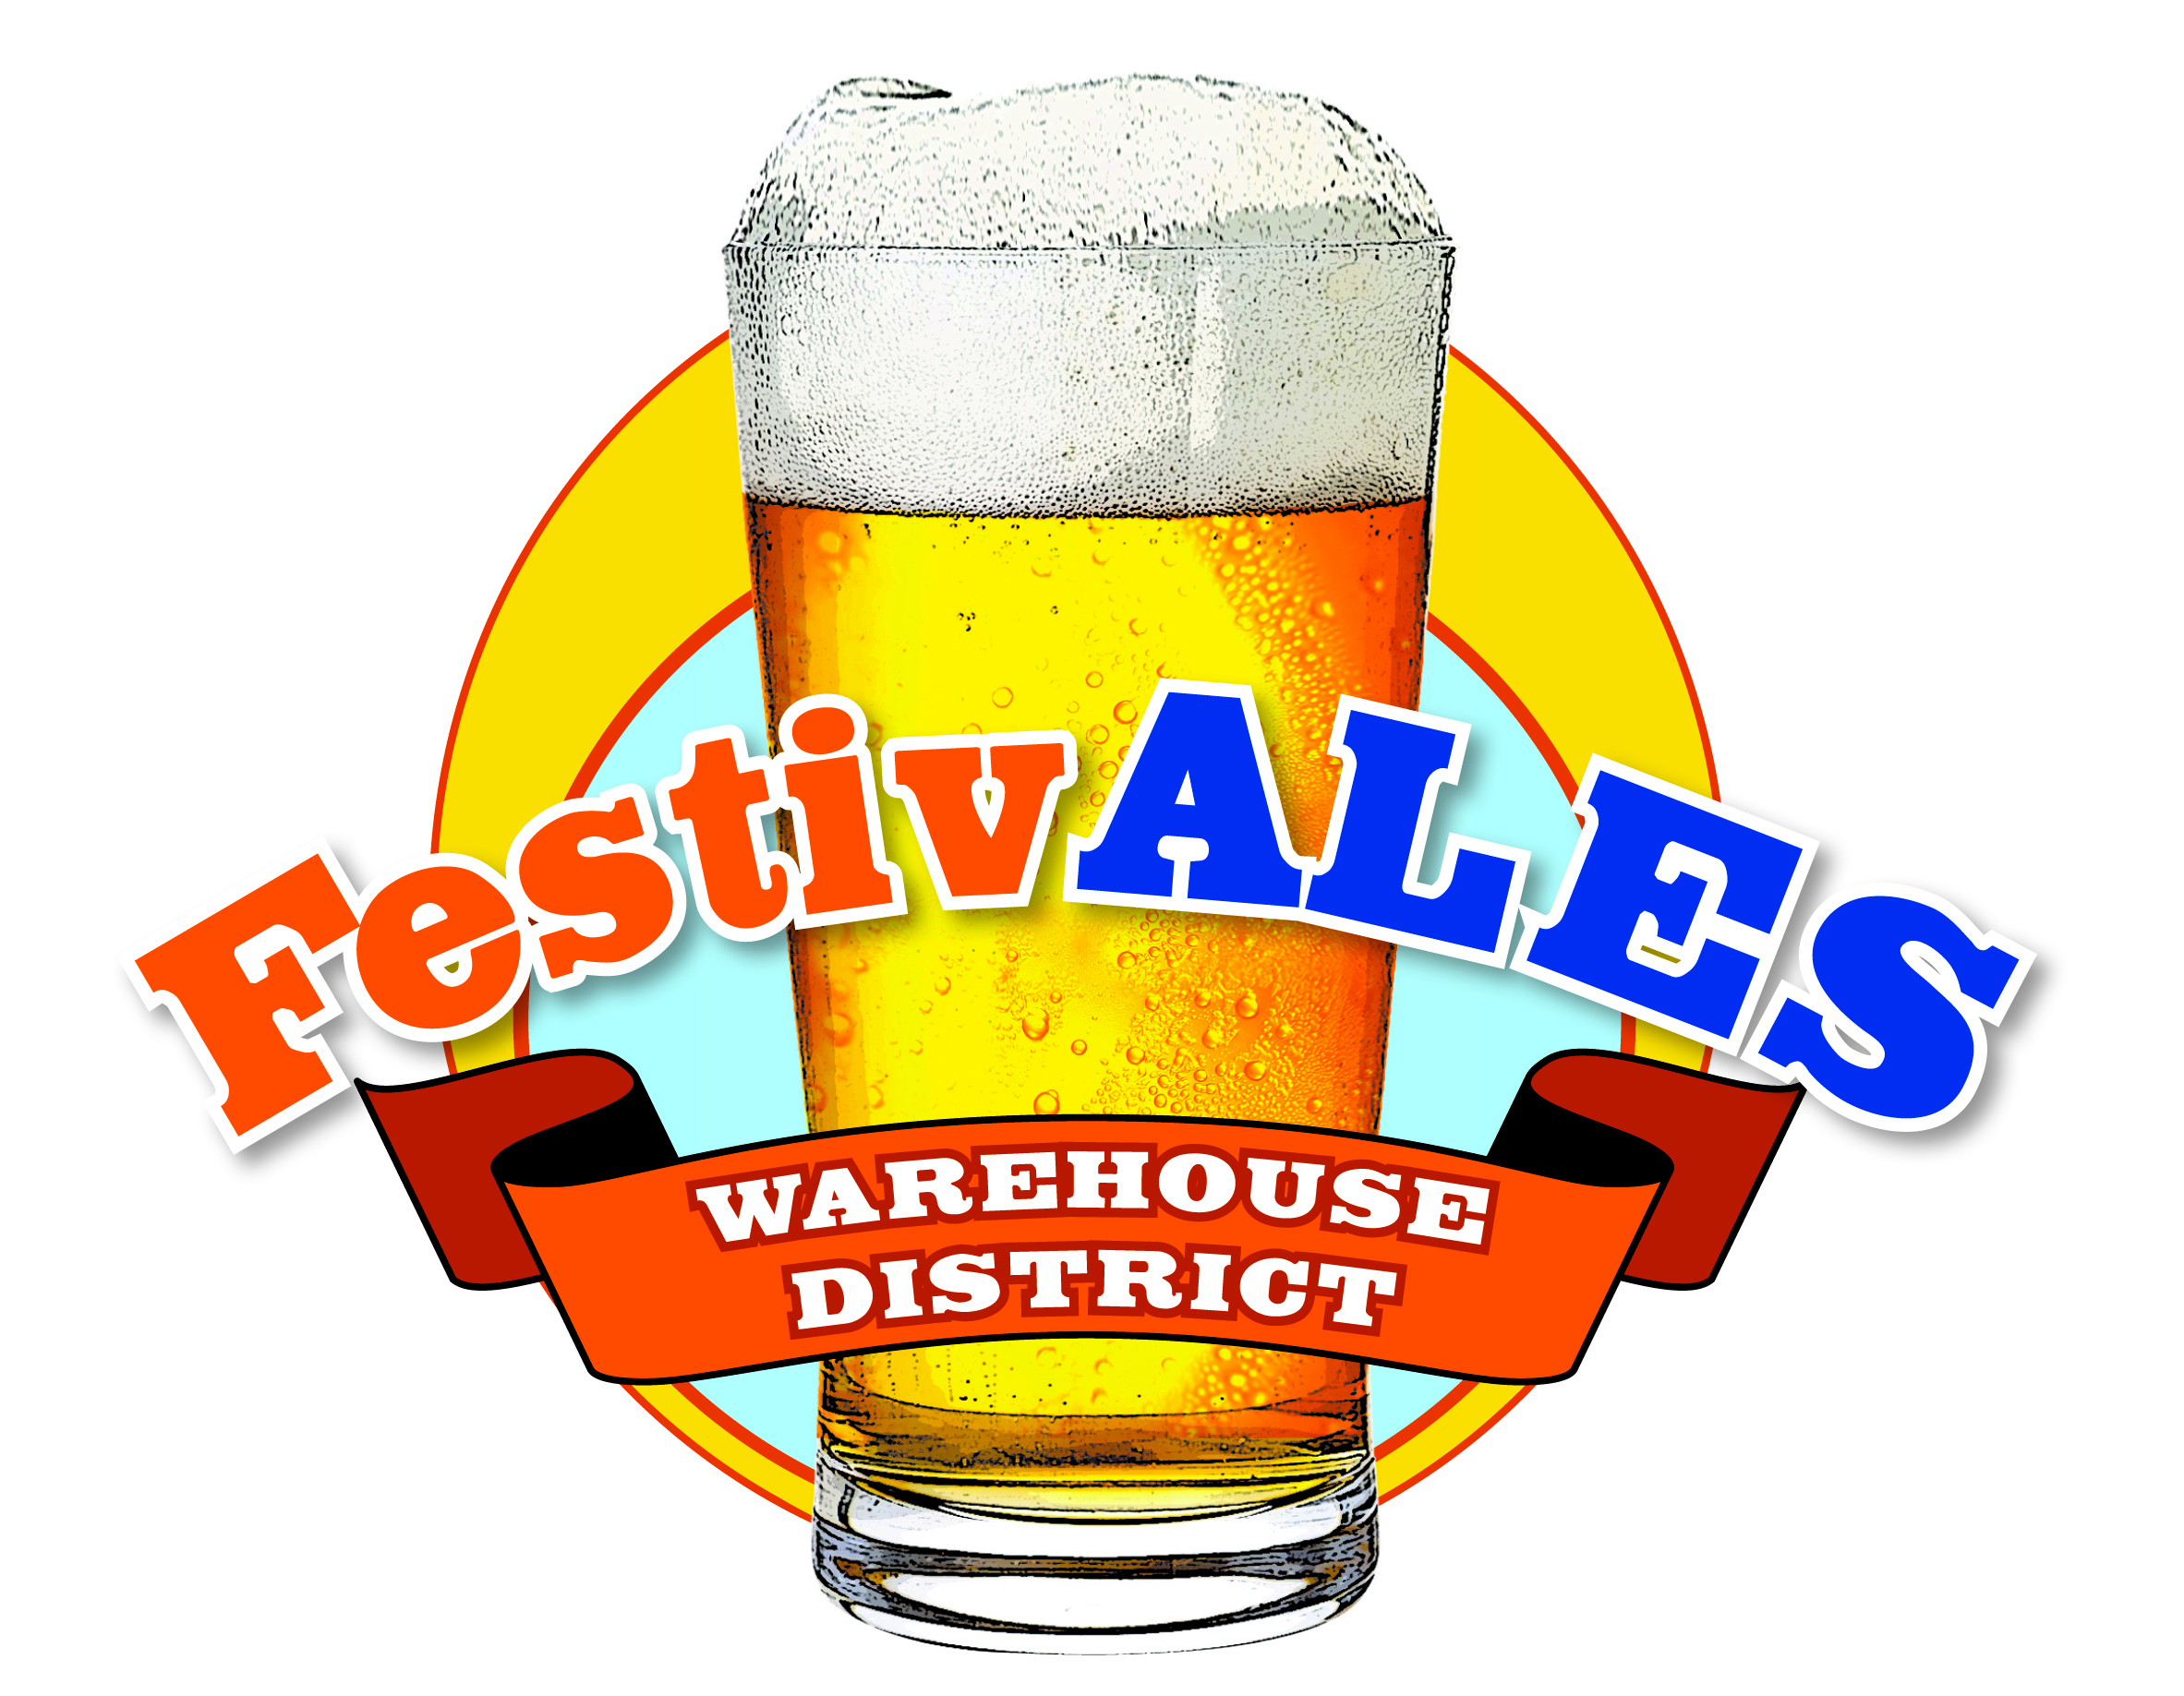 FestivALES 2014 Warehouse District (Logo)